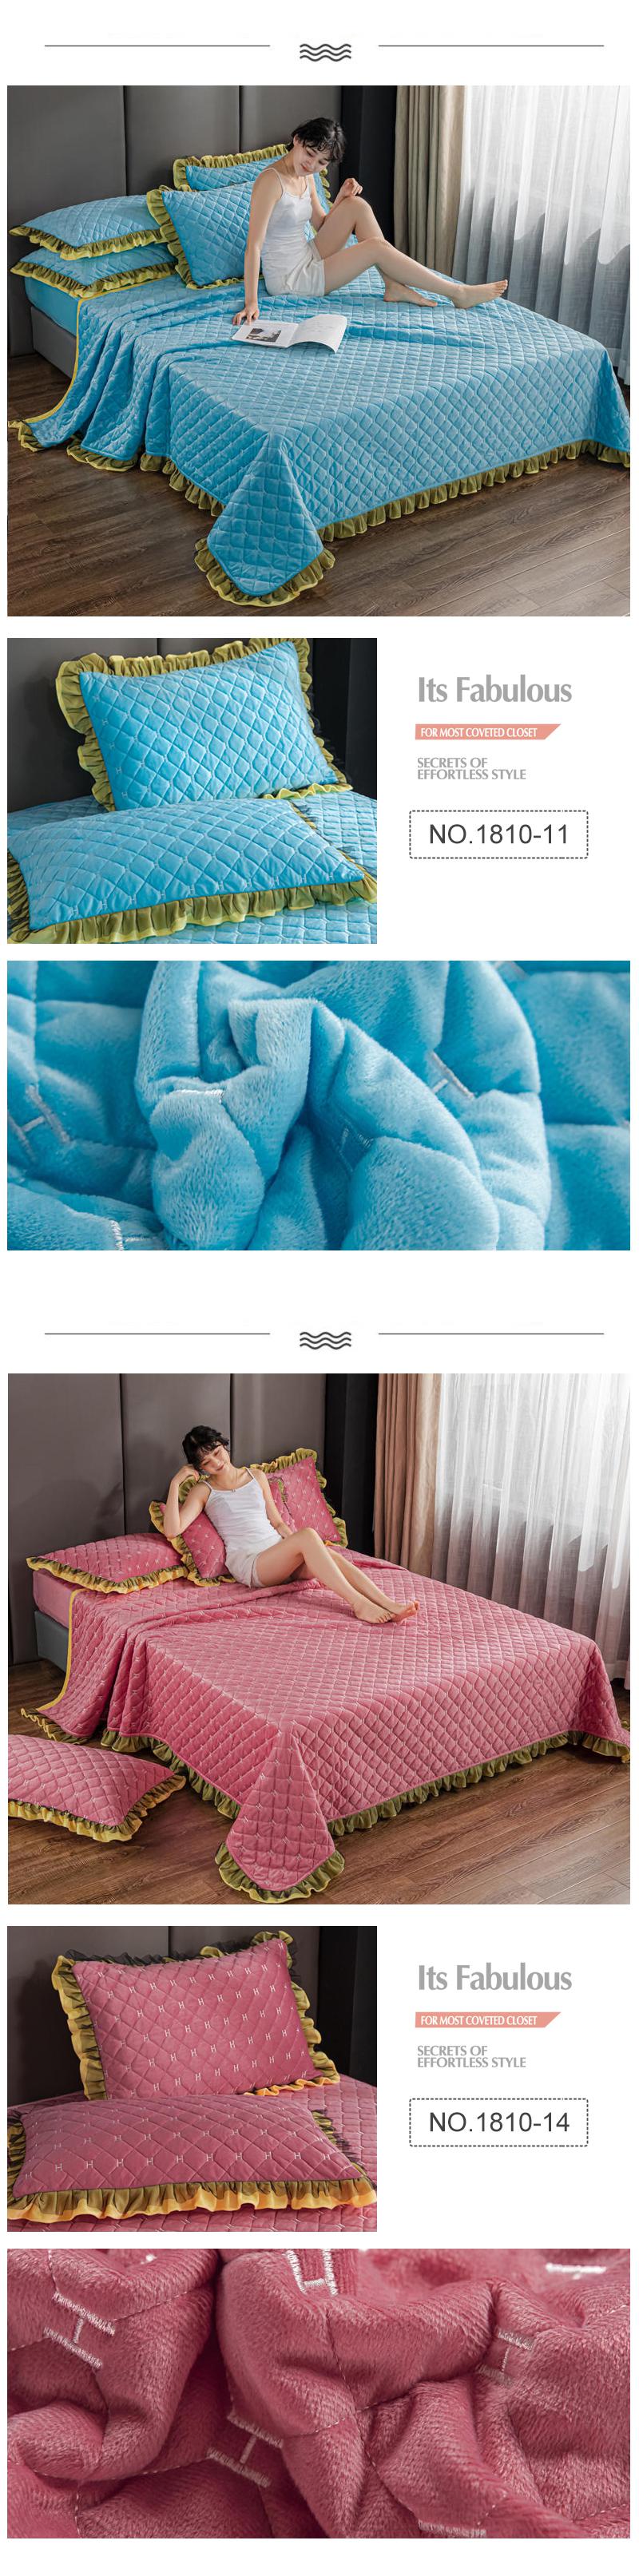 Discount Bedspread Double Bed